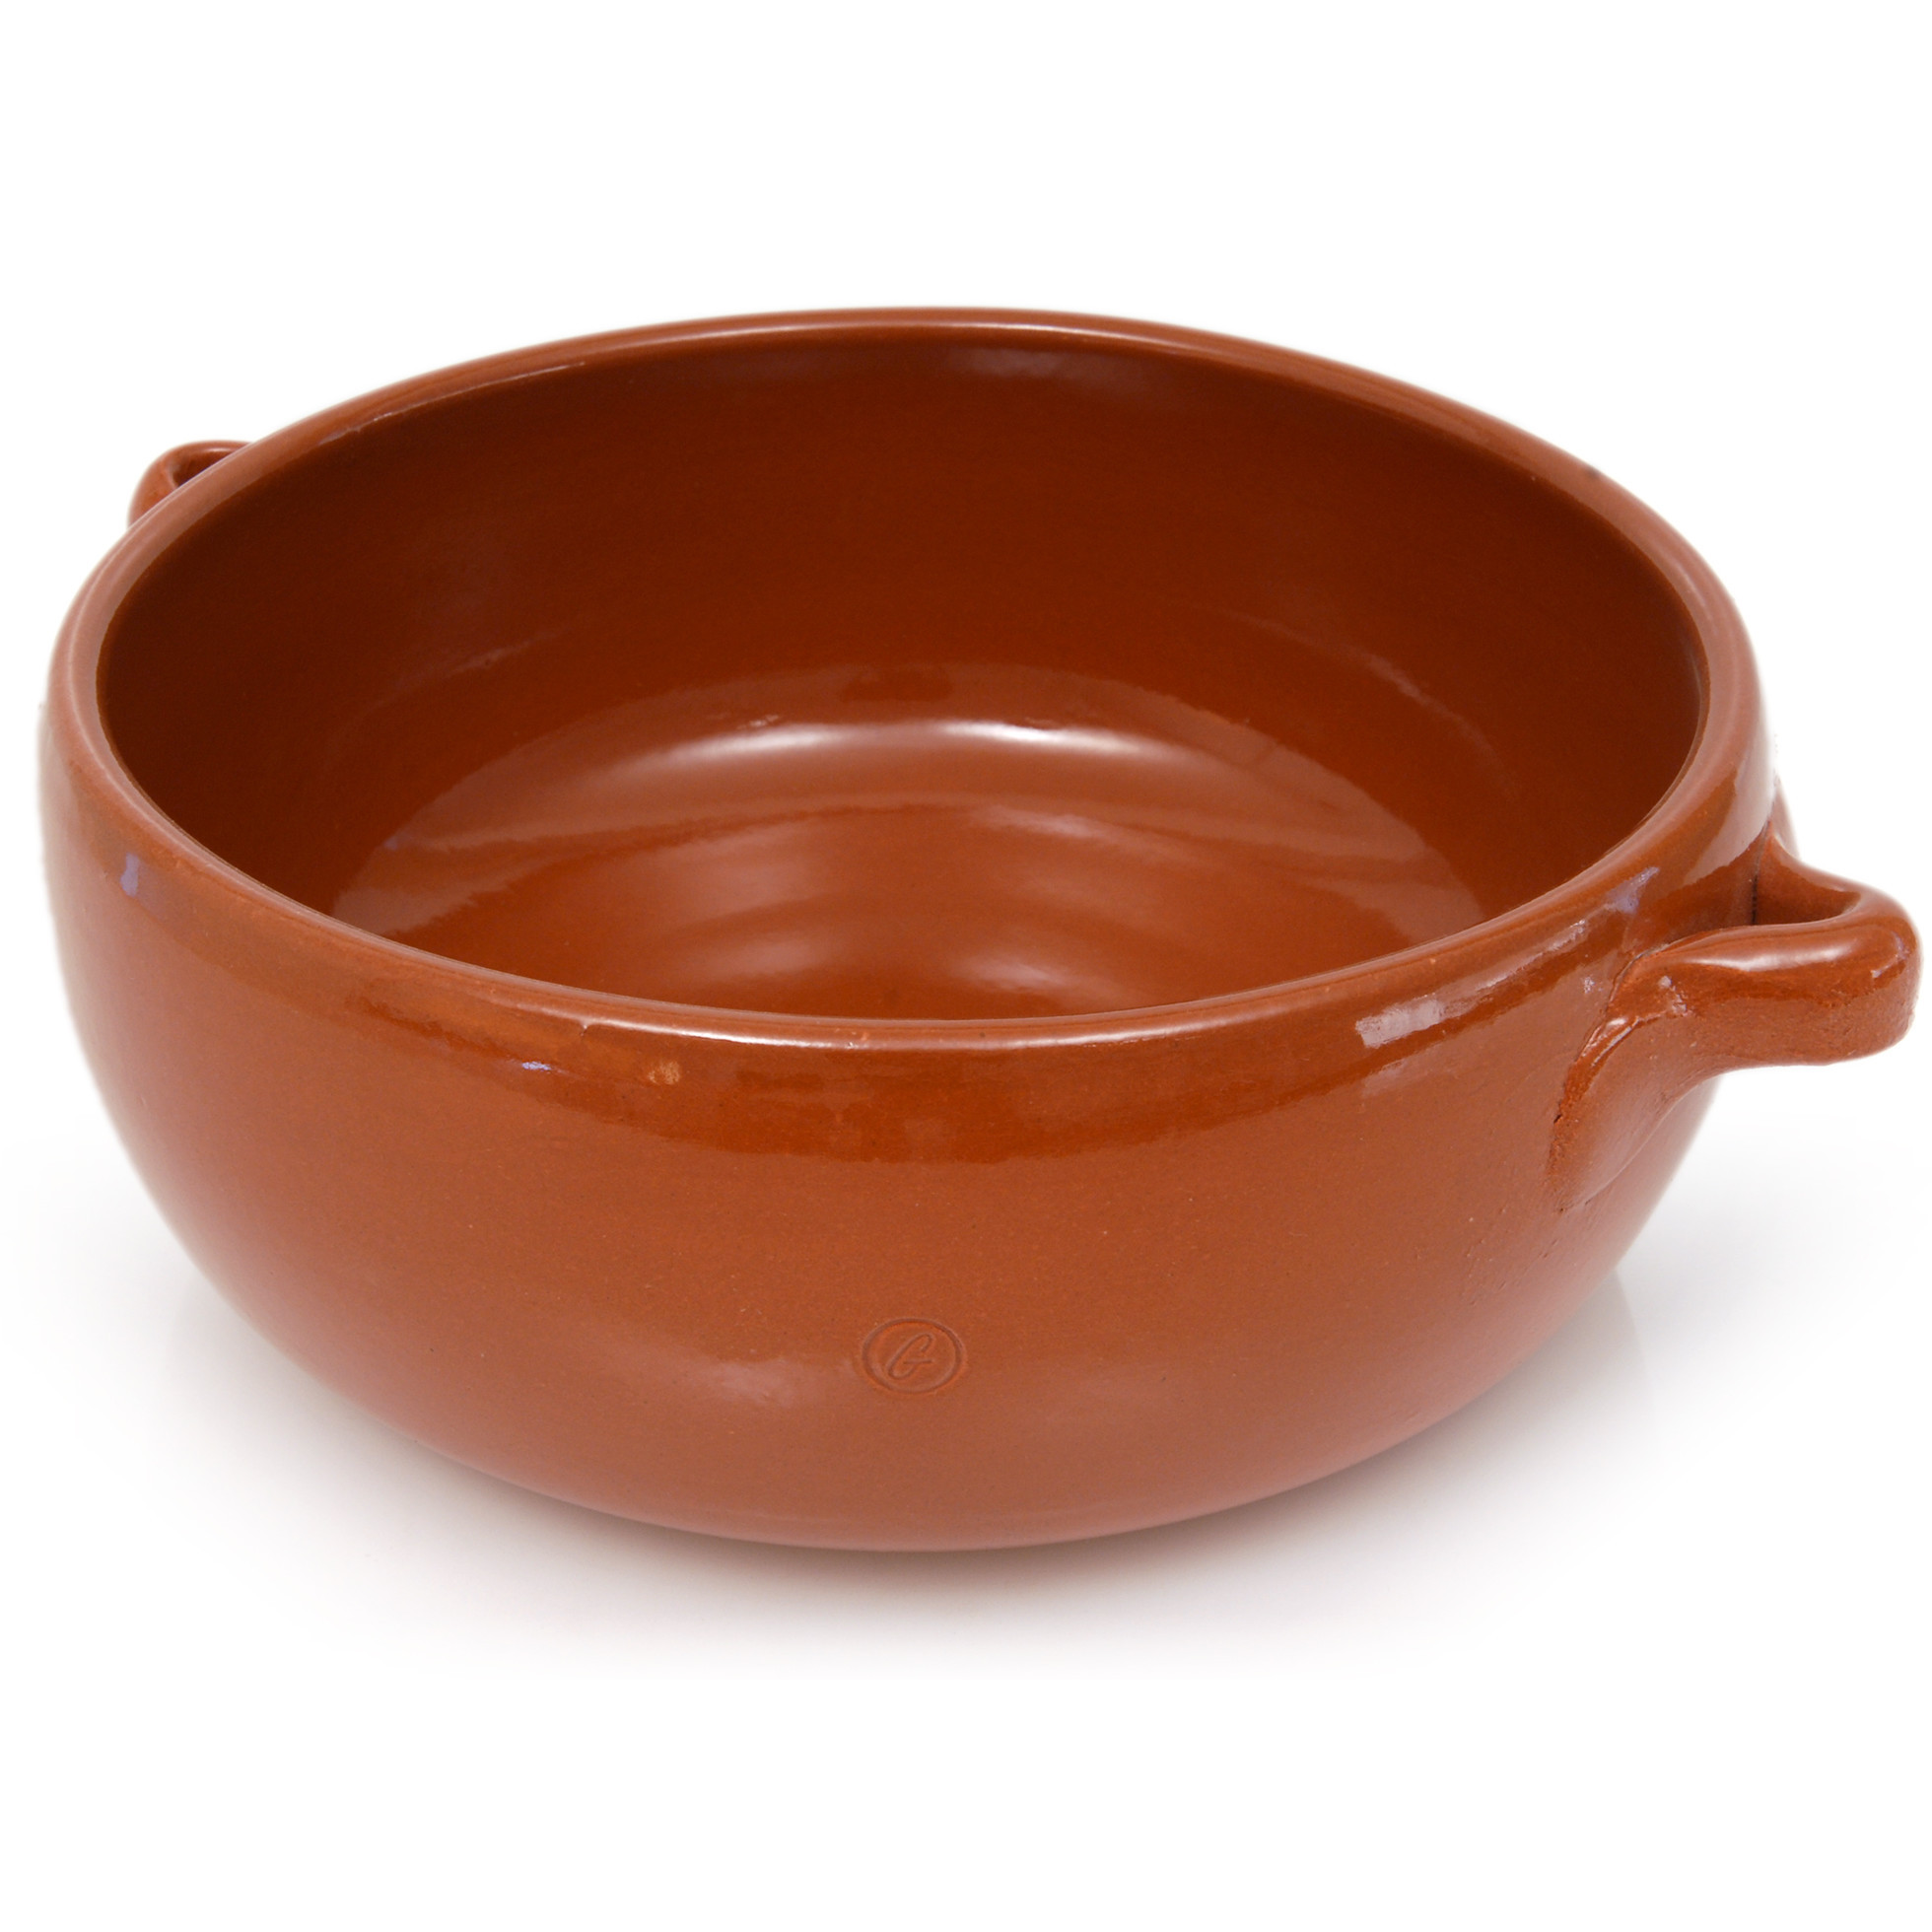 French Onion Soup Bowls
 Graupera Pottery Artisans 17 oz French ion Soup Bowl